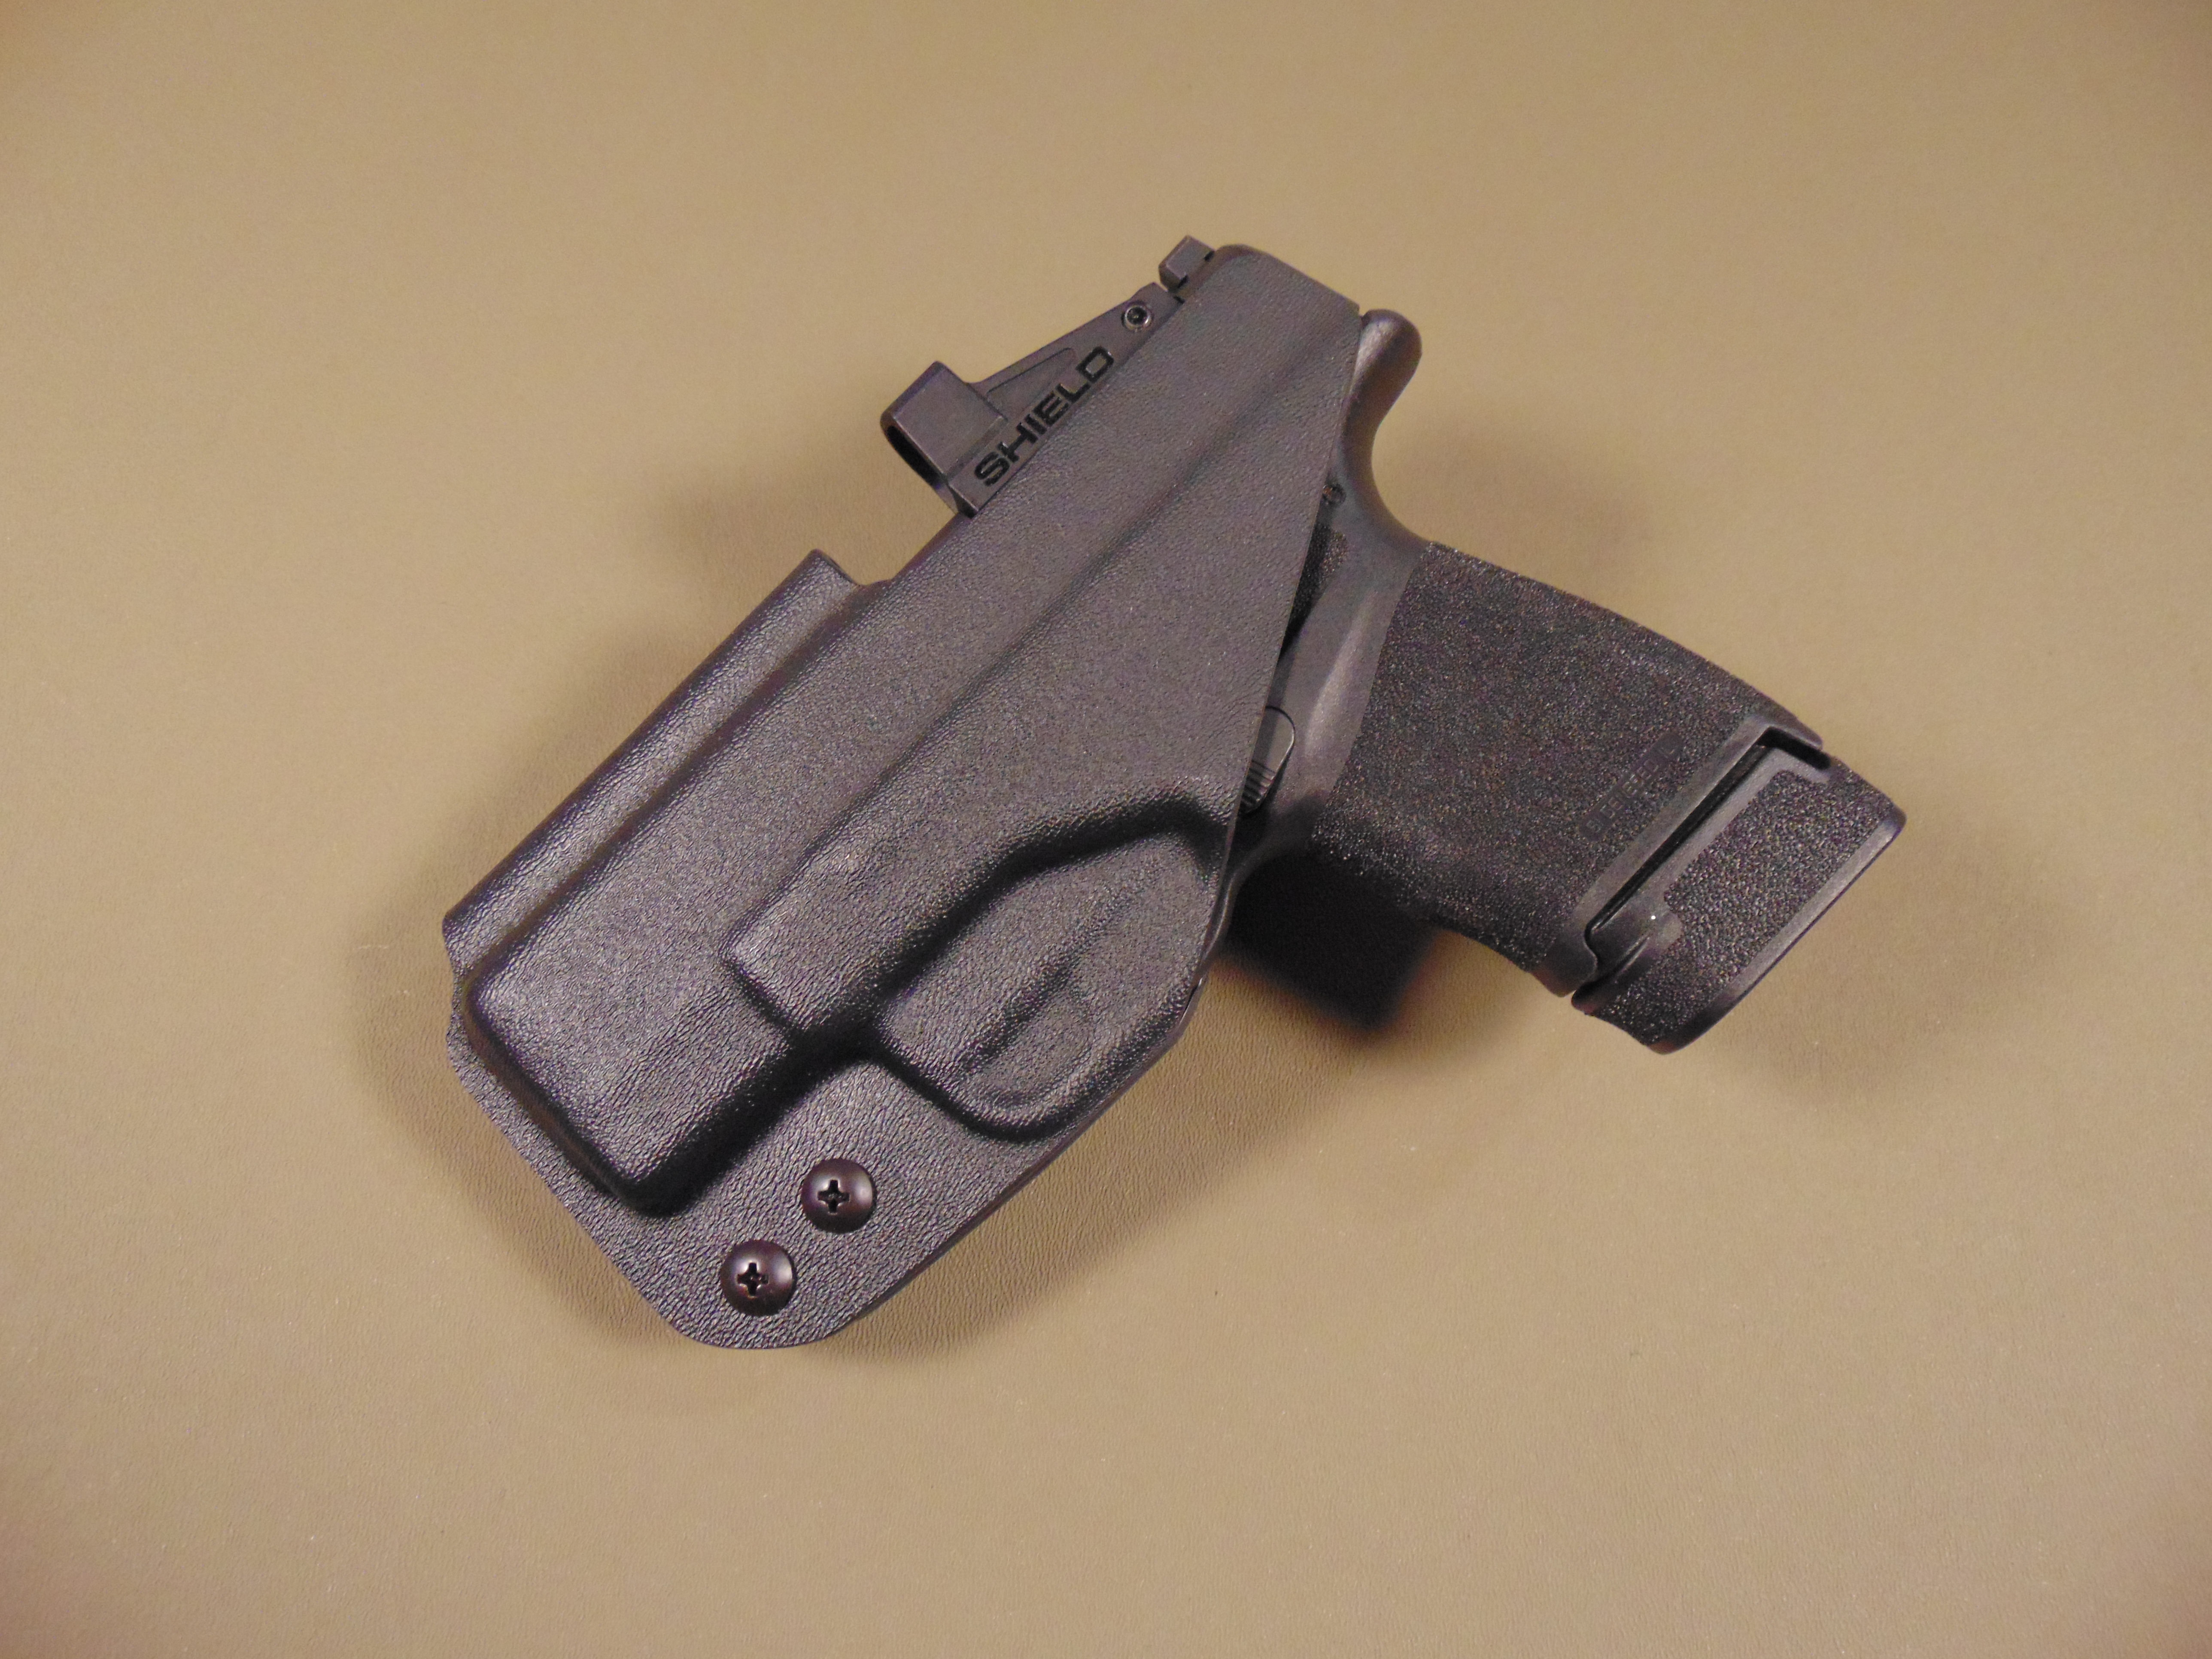 Details about   Holster Accessories Hidden Enhancement IWB Quick Dial Gun Sheath Parts 